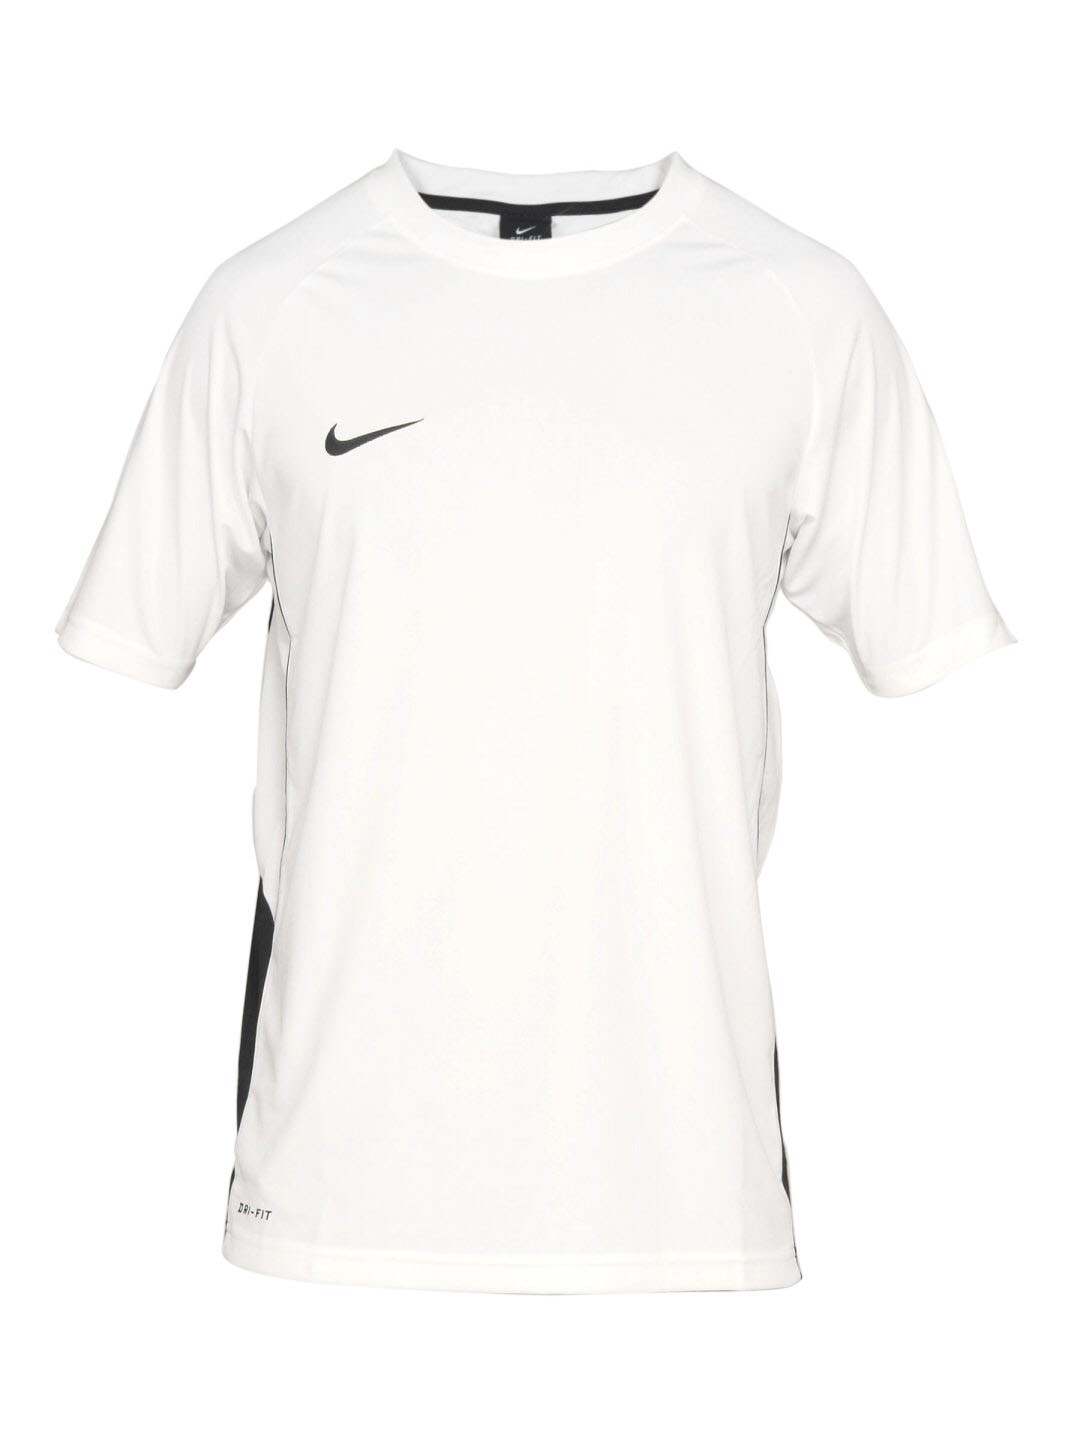 Nike Men's Team Poly White T-Shirt